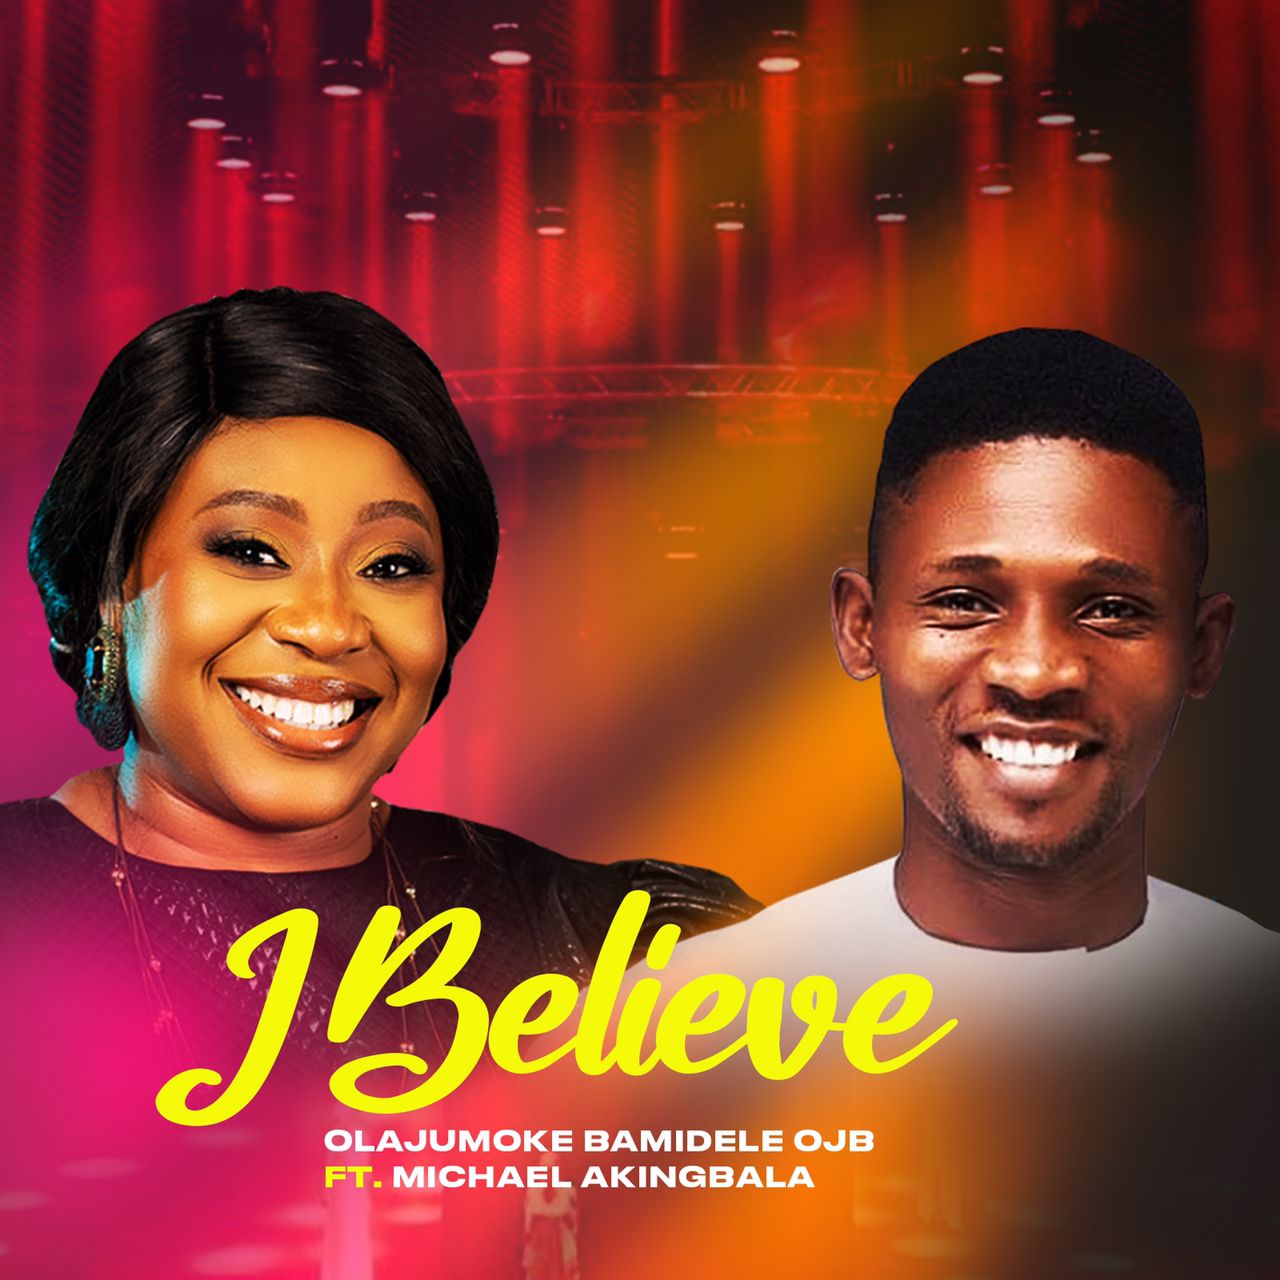 I Believe – Olajumoke Bamidele OJB ft Michael Akingbala